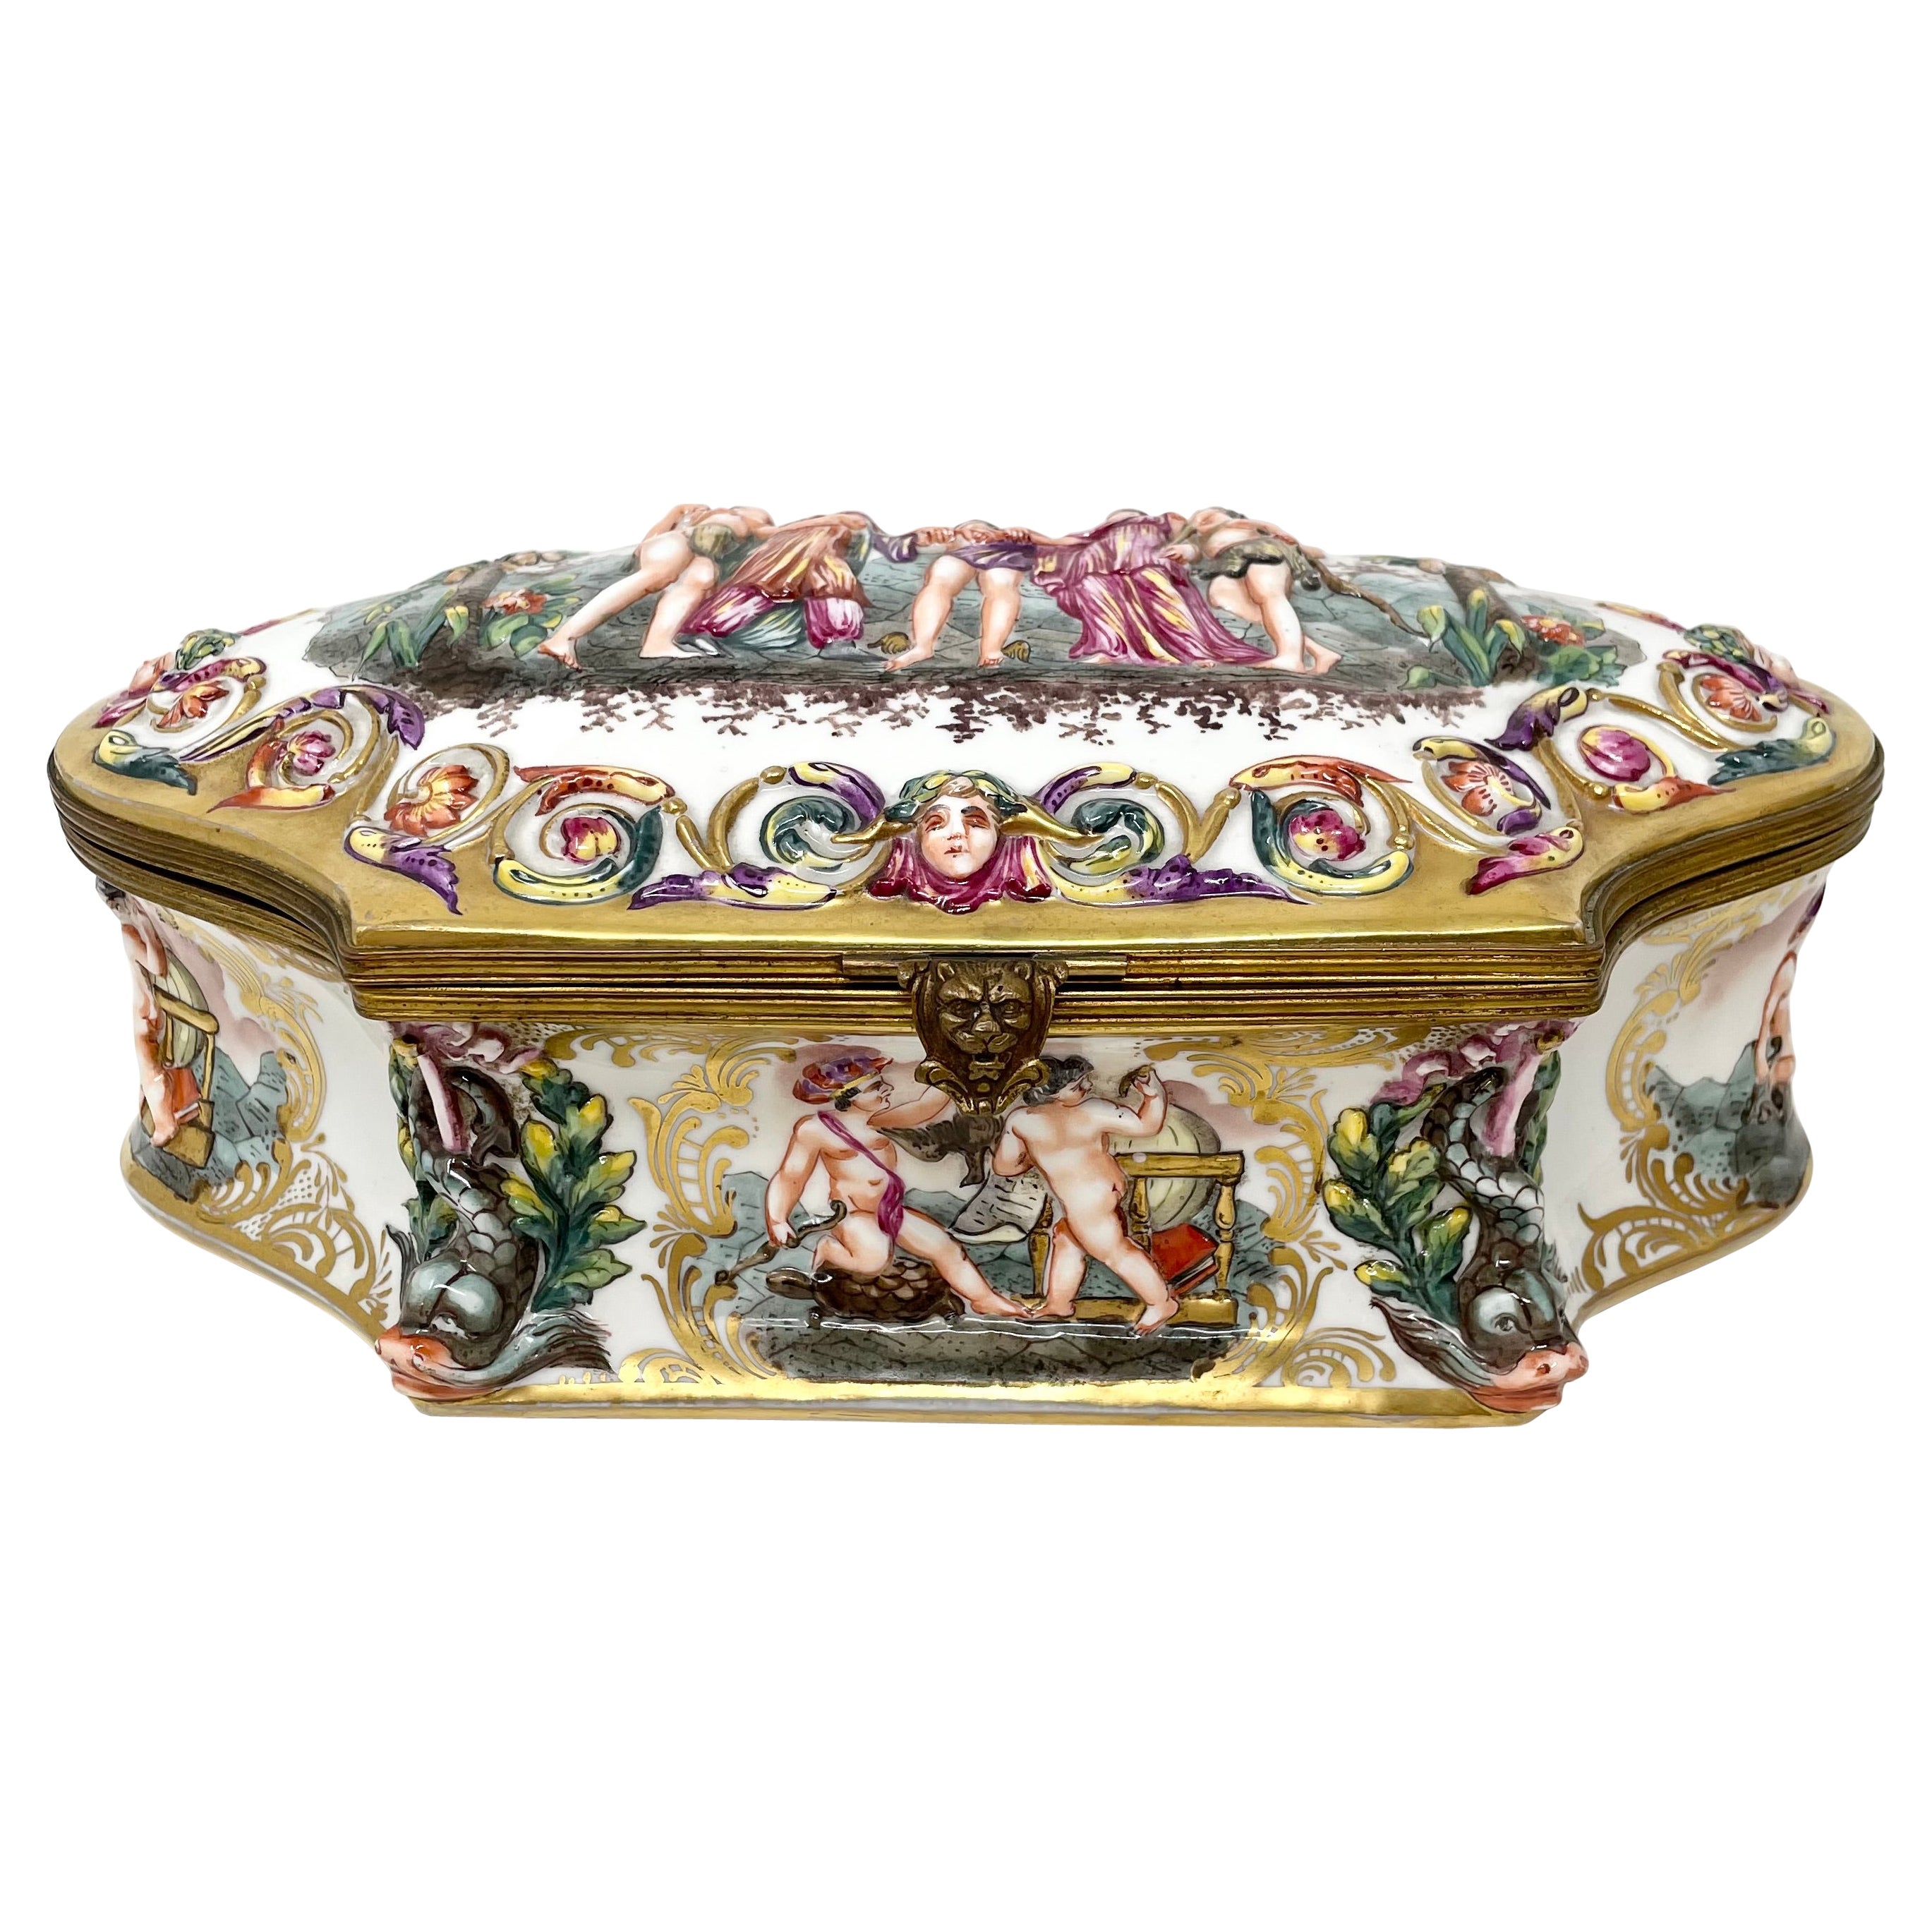 Large Antique Italian Capo di Monte Hand-Painted Porcelain Jewel Box circa 1900.